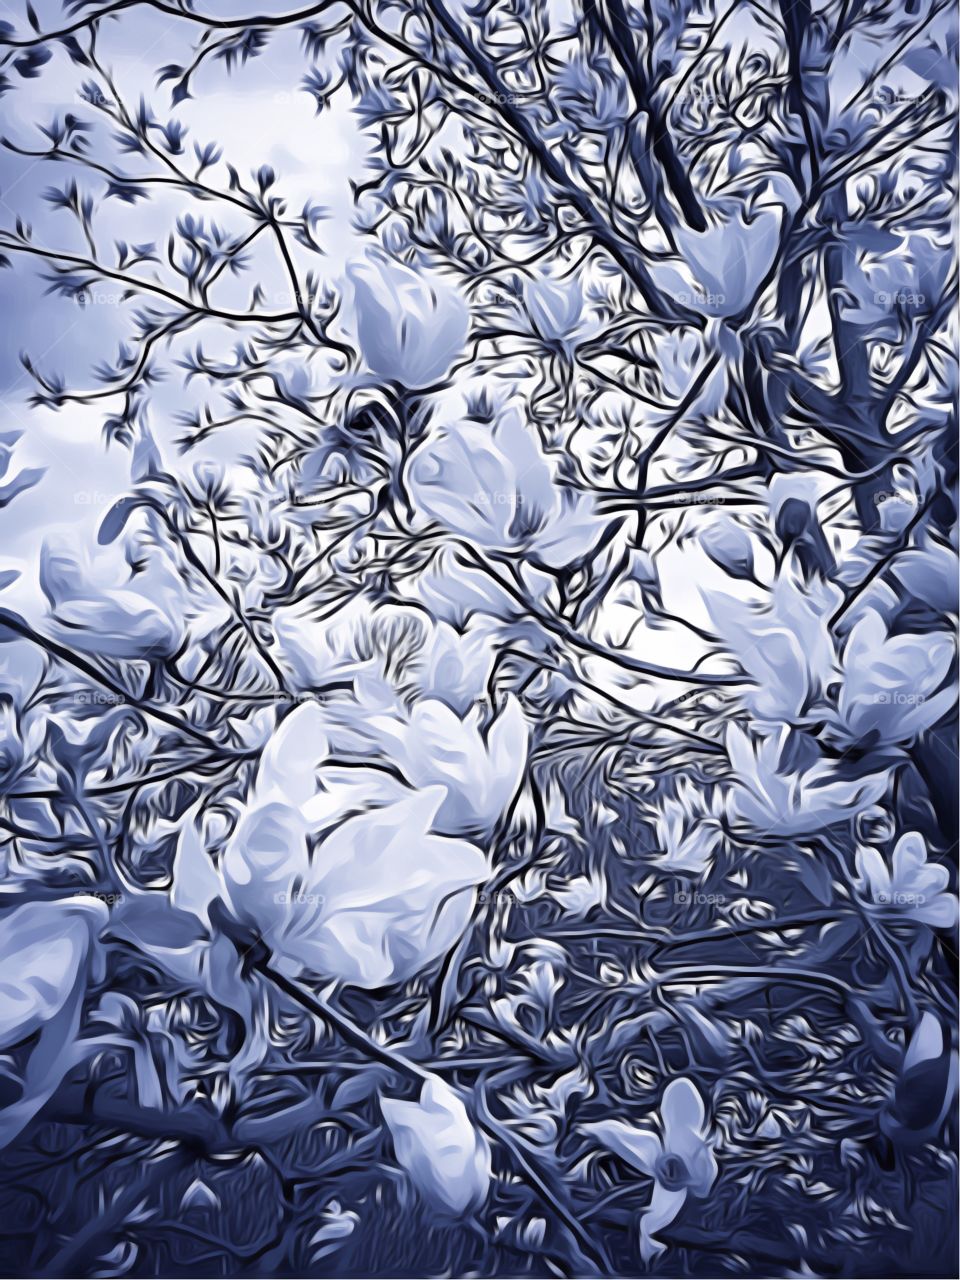 Magnolia Tree, Central Park-New York City. Instagram,@PennyPeronto